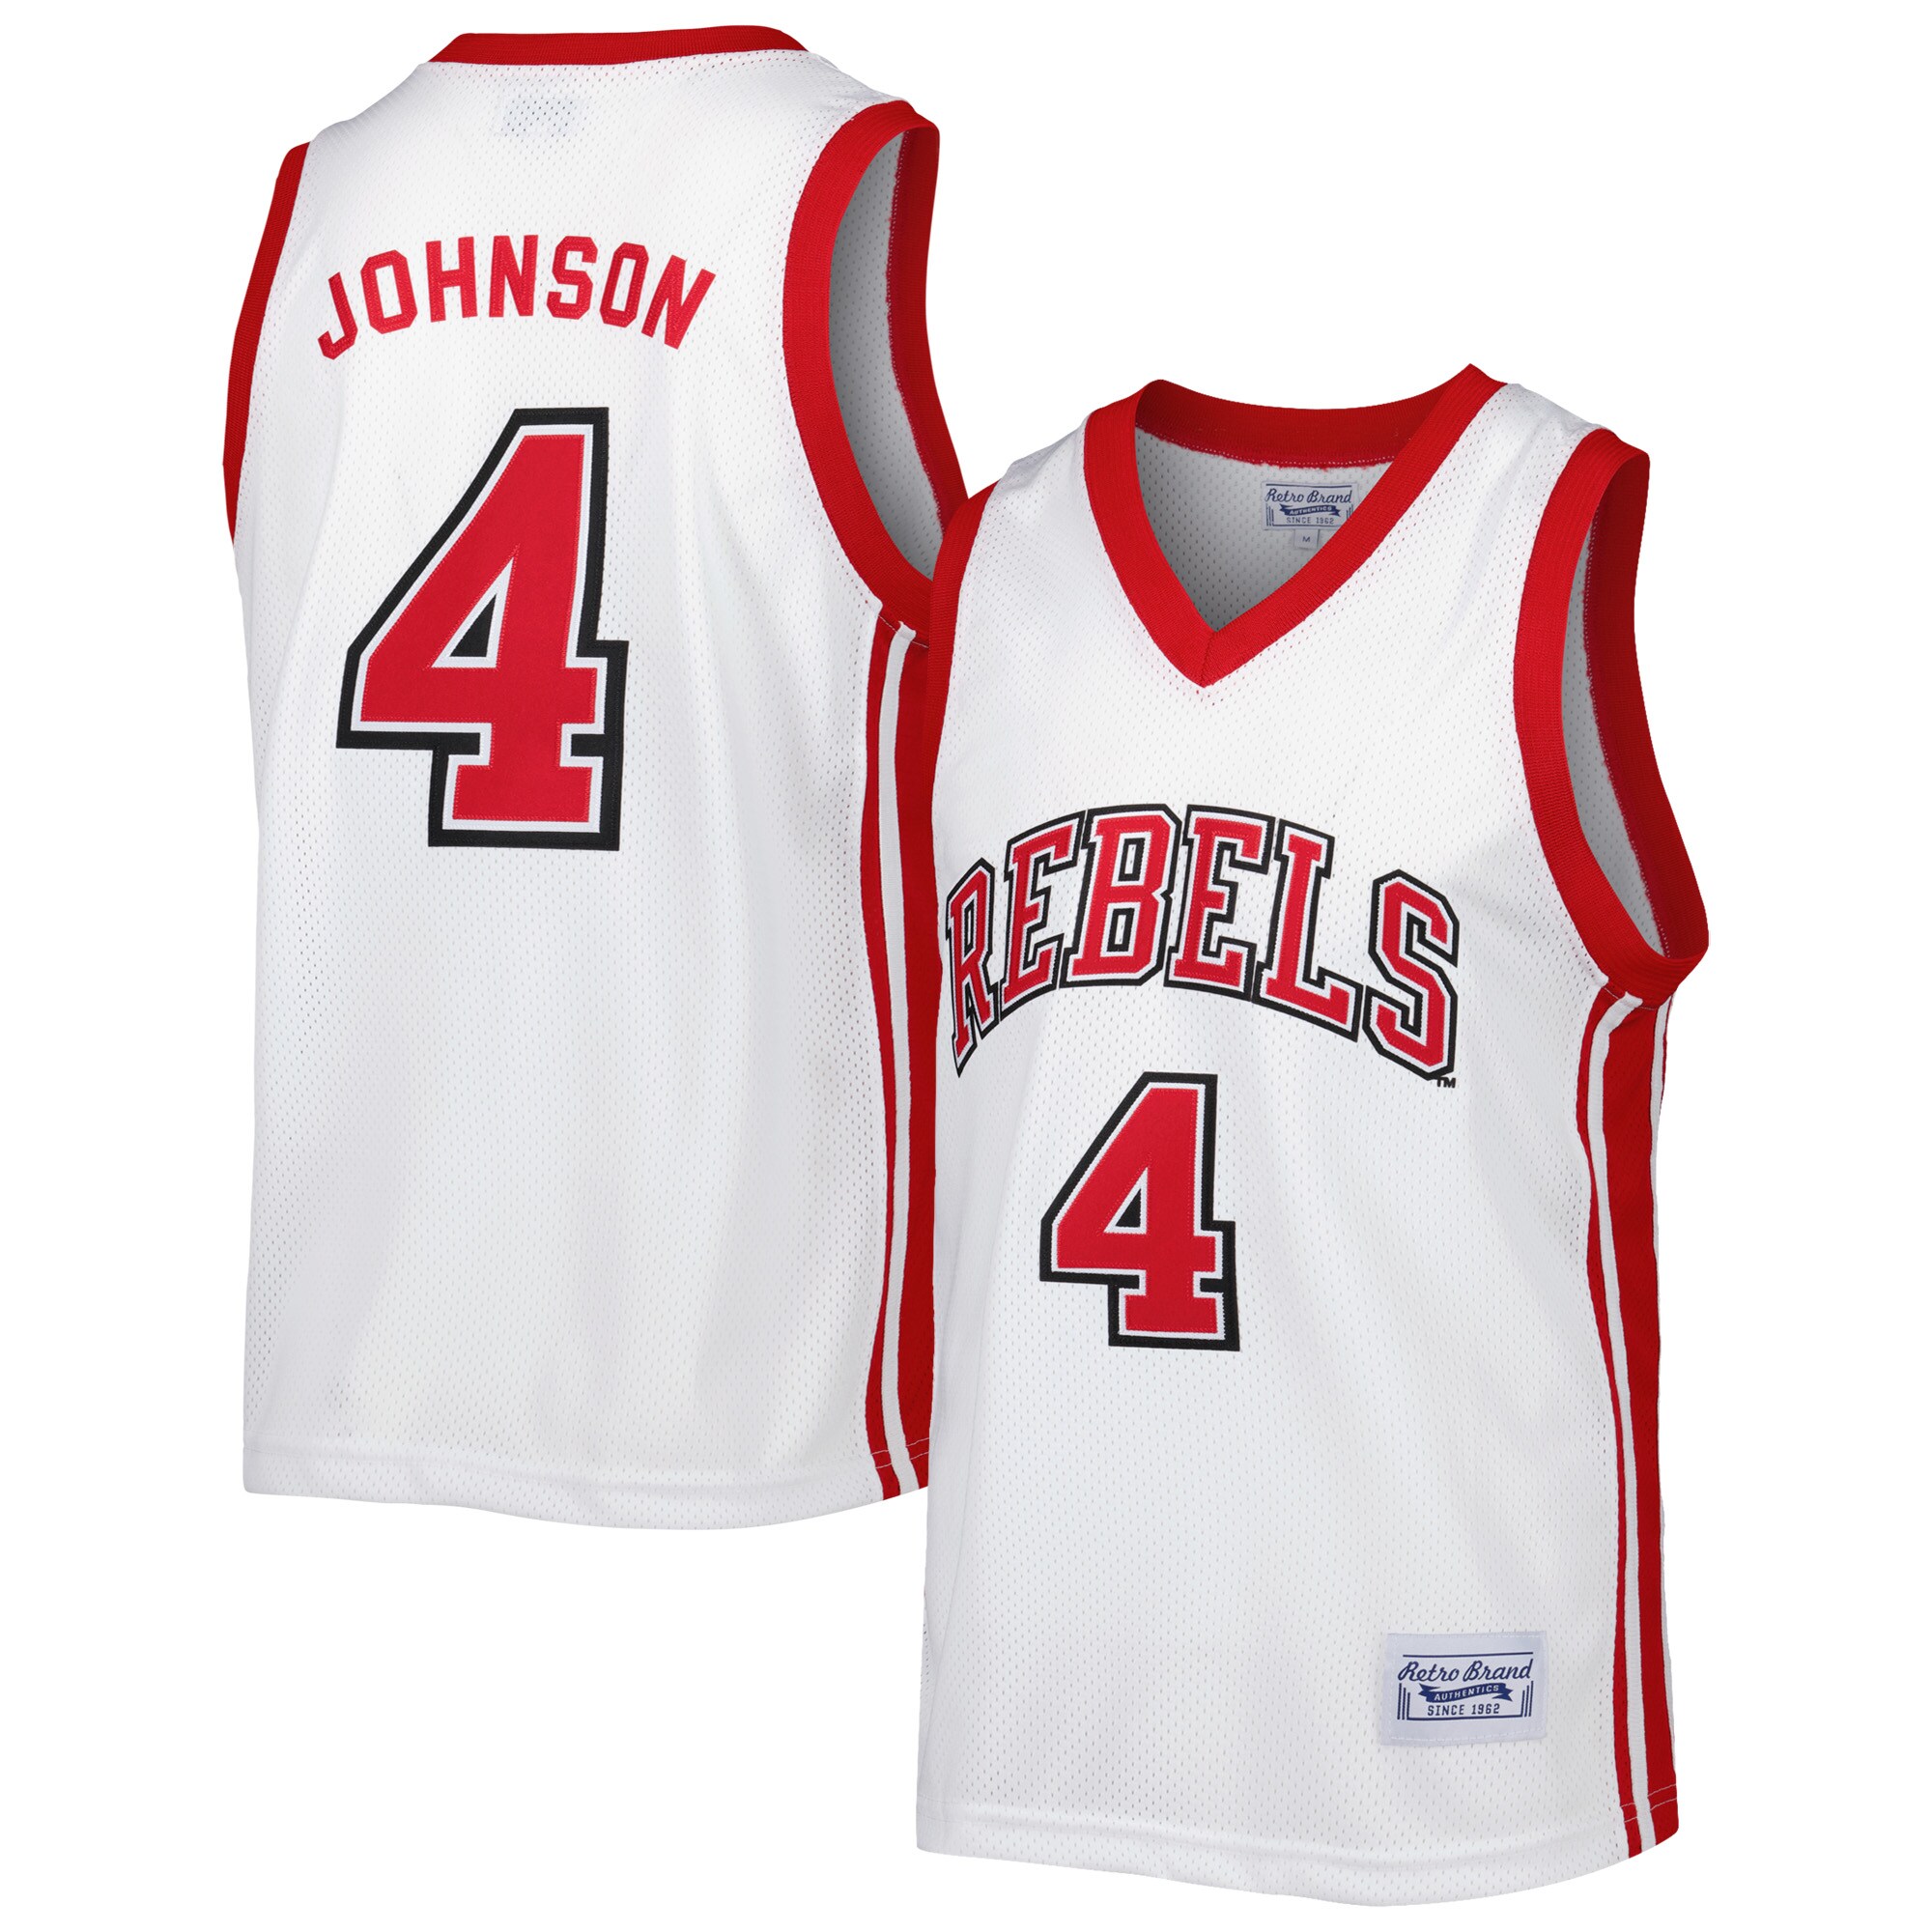 Larry Johnson Unlv Rebels Original Retro Brand Alumni Commemorative Replica Basketball Jersey - White For Youth Women Men